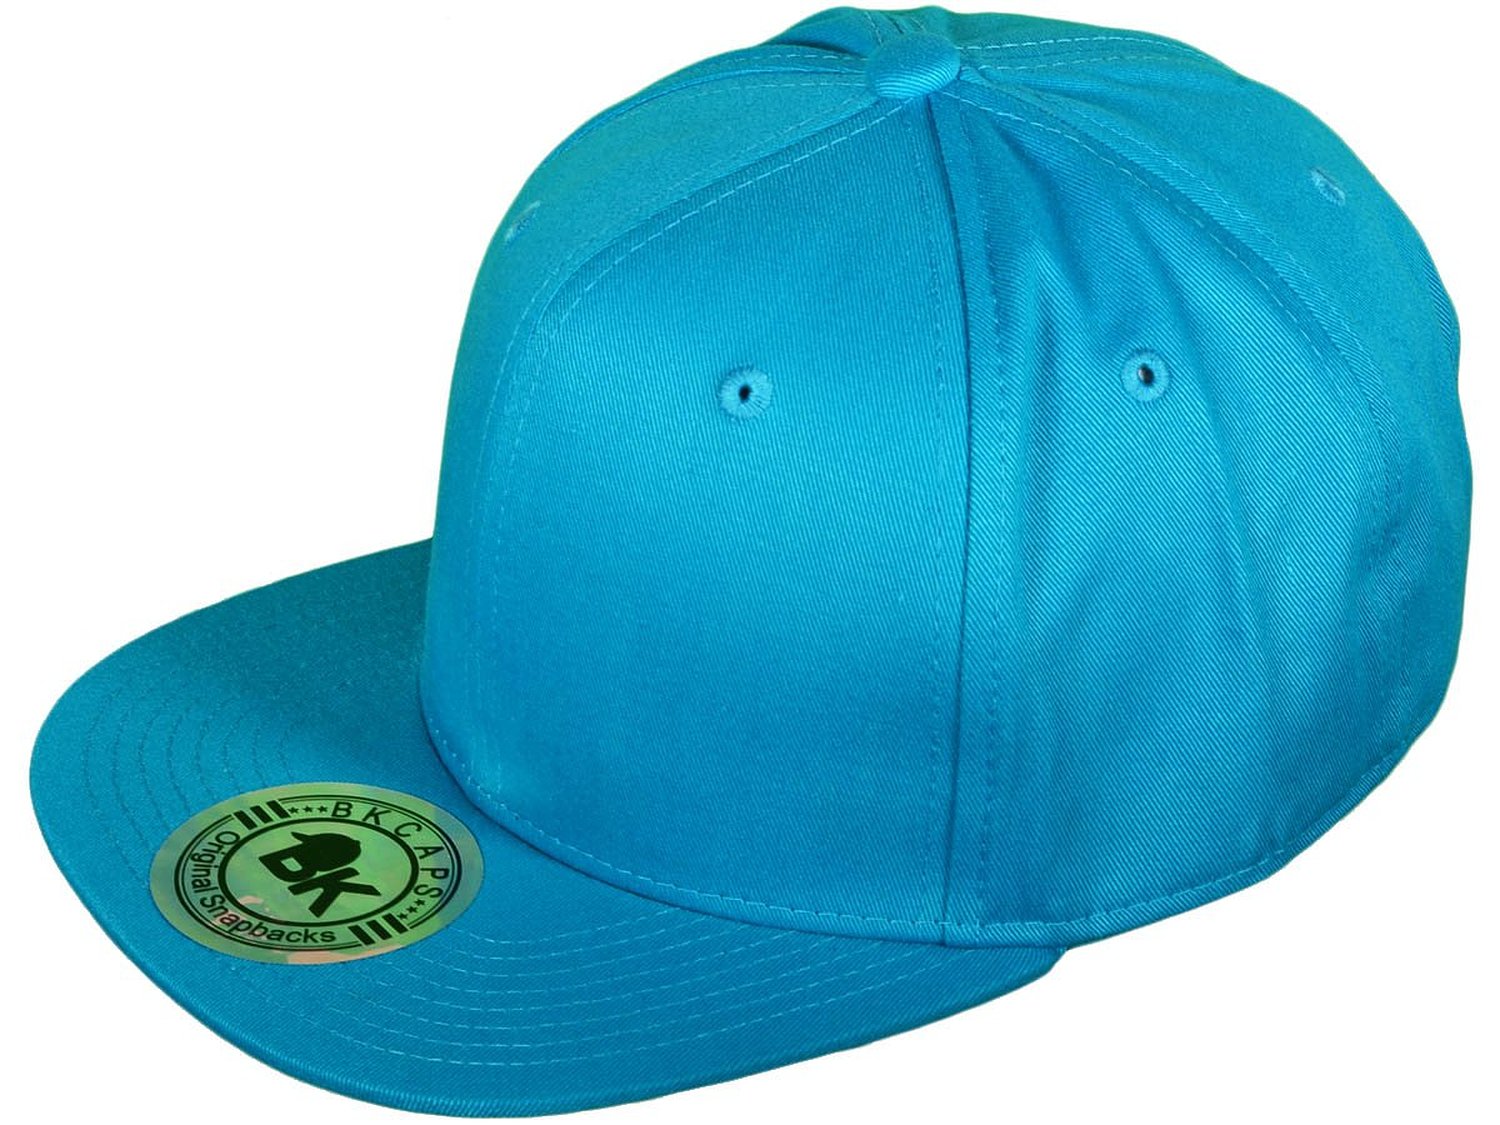 BK Caps Cotton Flat Bill Blank/Plain Adjustable Snapback Hats Caps (Many Colors)